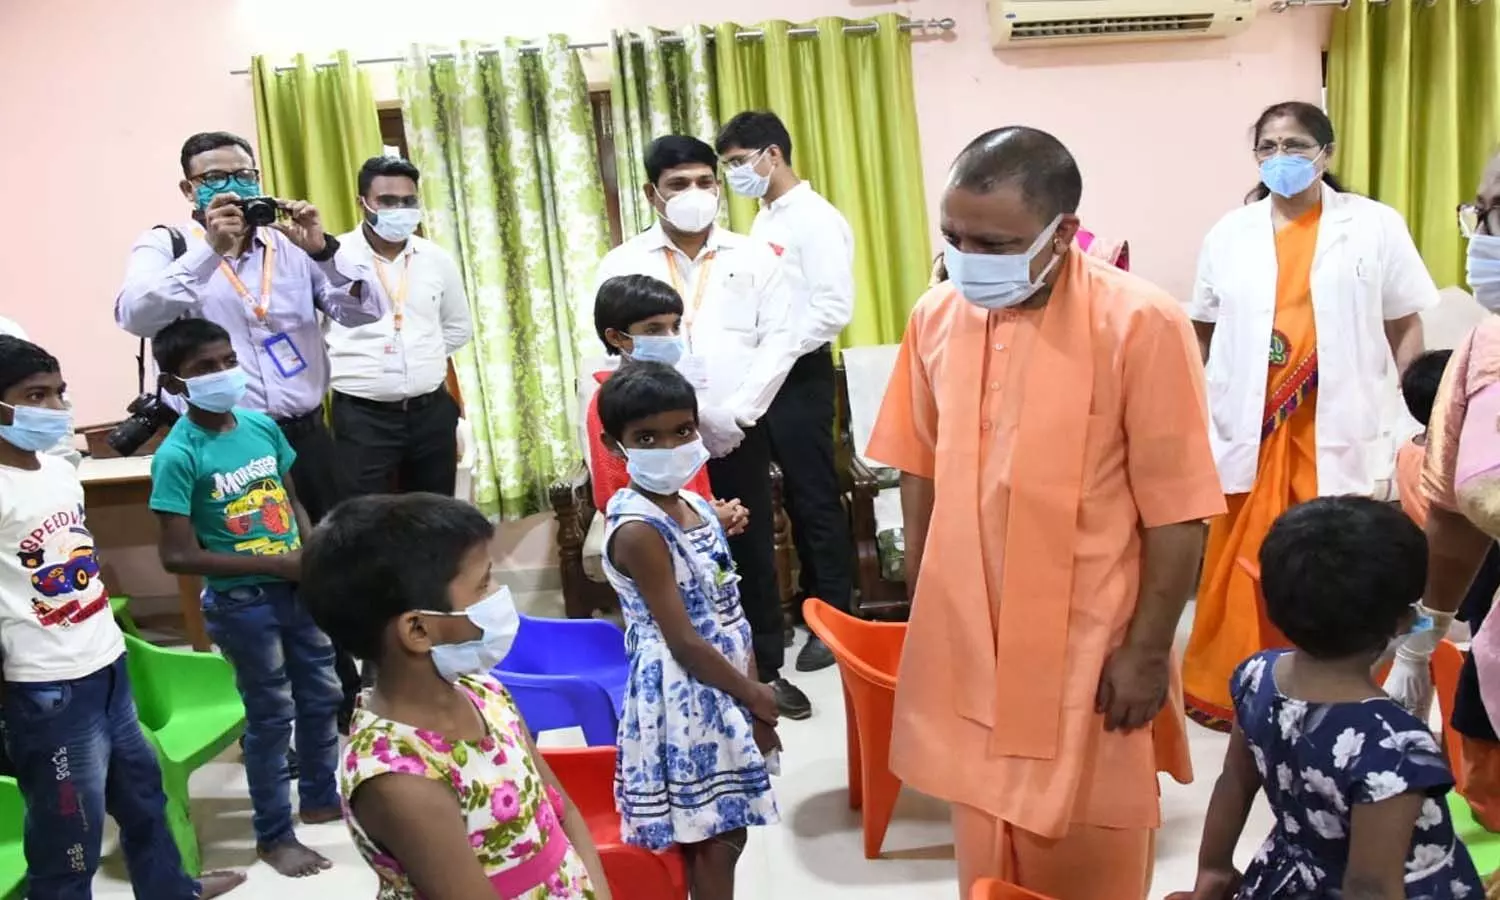 CM Yogi on Friday met five children